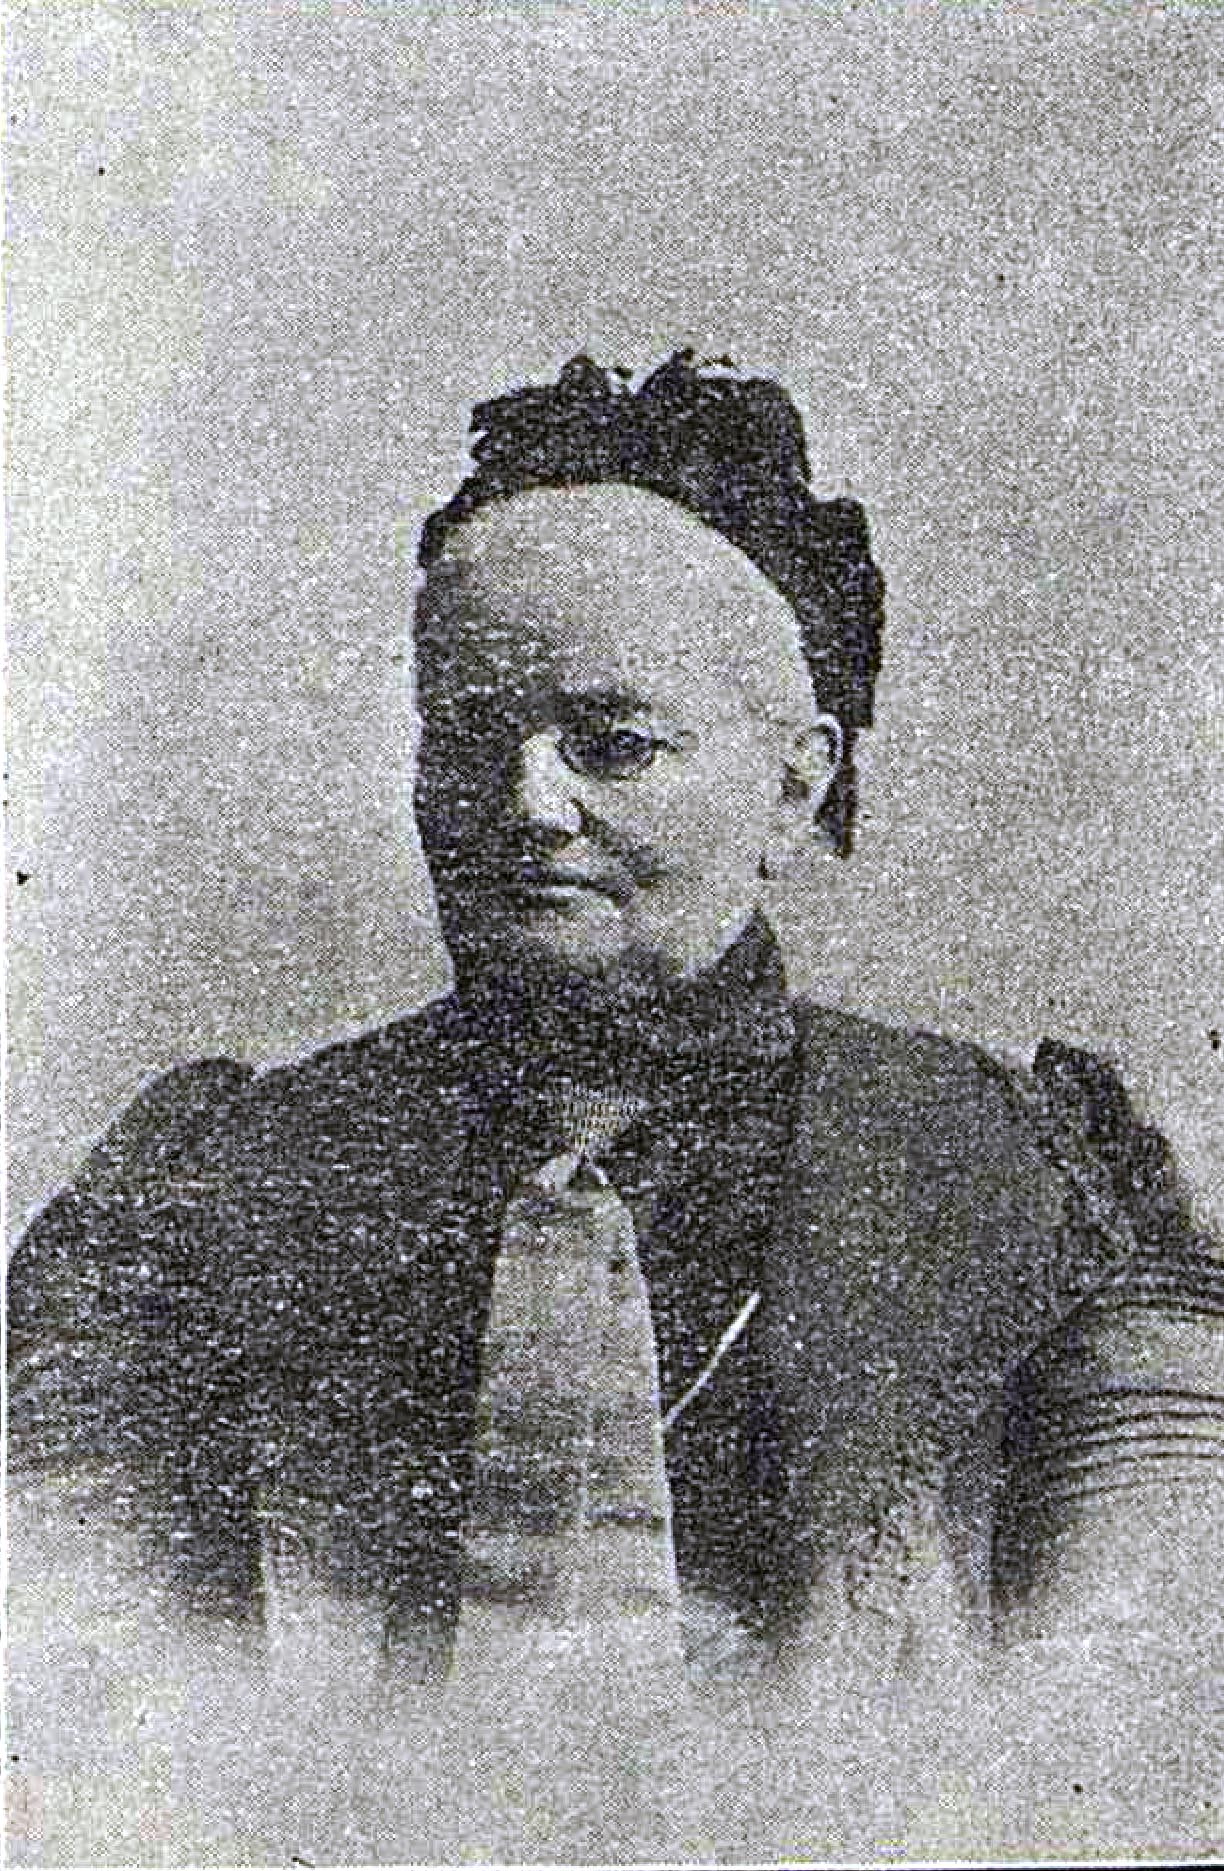 Александра Егоровна Грацинская. Начальница гимназии 1871 - 1902 г.г.